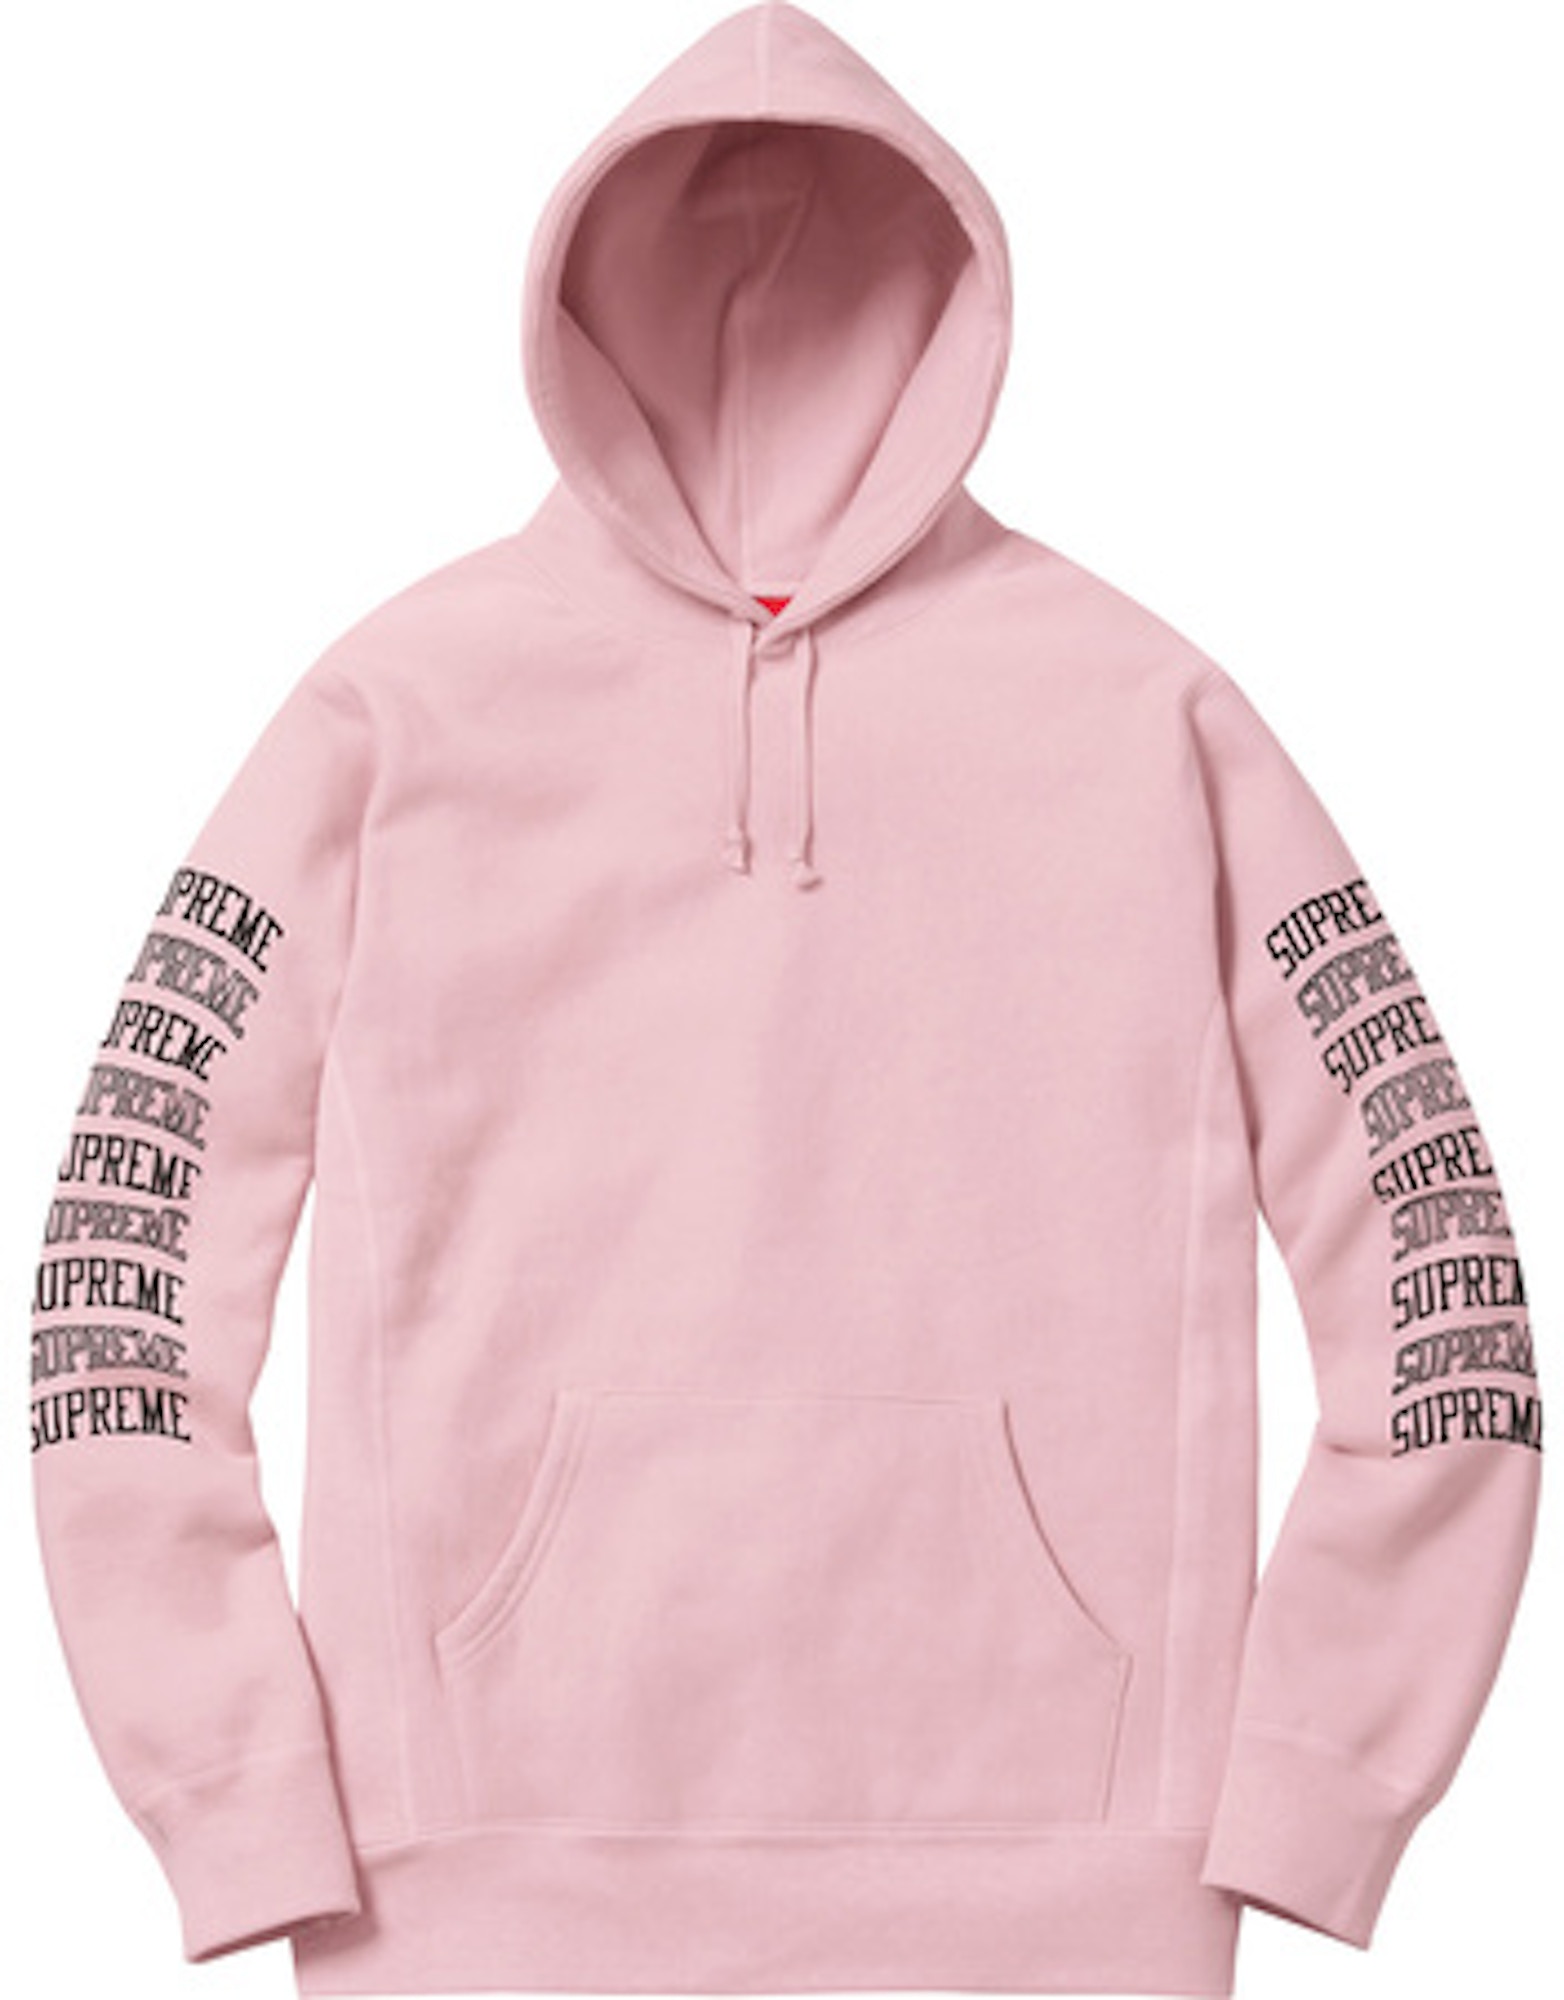 Supreme Sleeve Arc Hooded Sweatshirt Dusty Pink - SS17